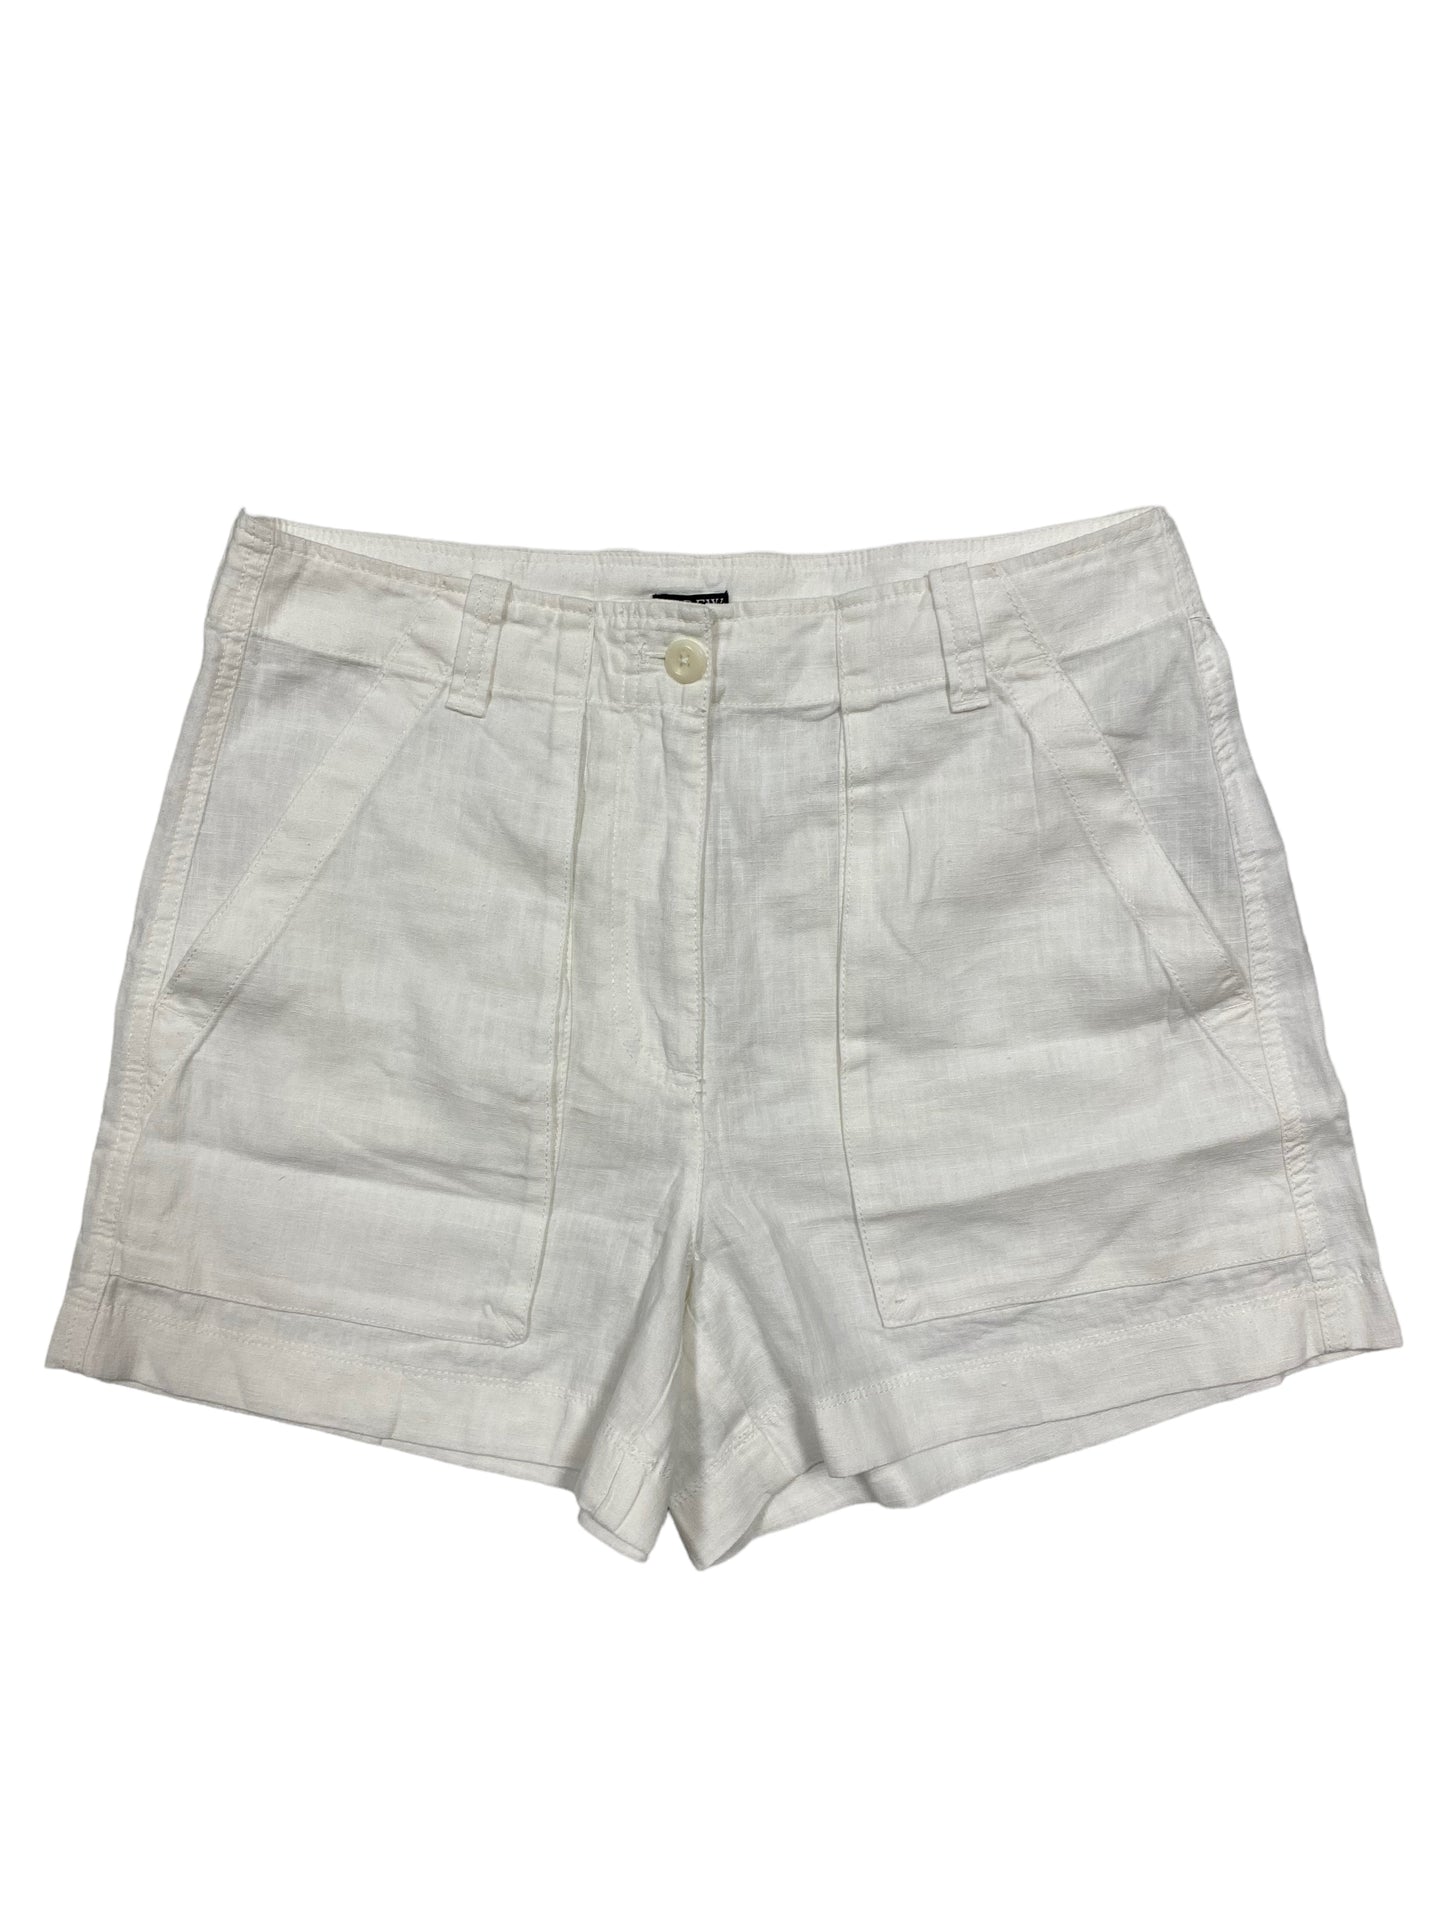 White Shorts J. Crew, Size 8